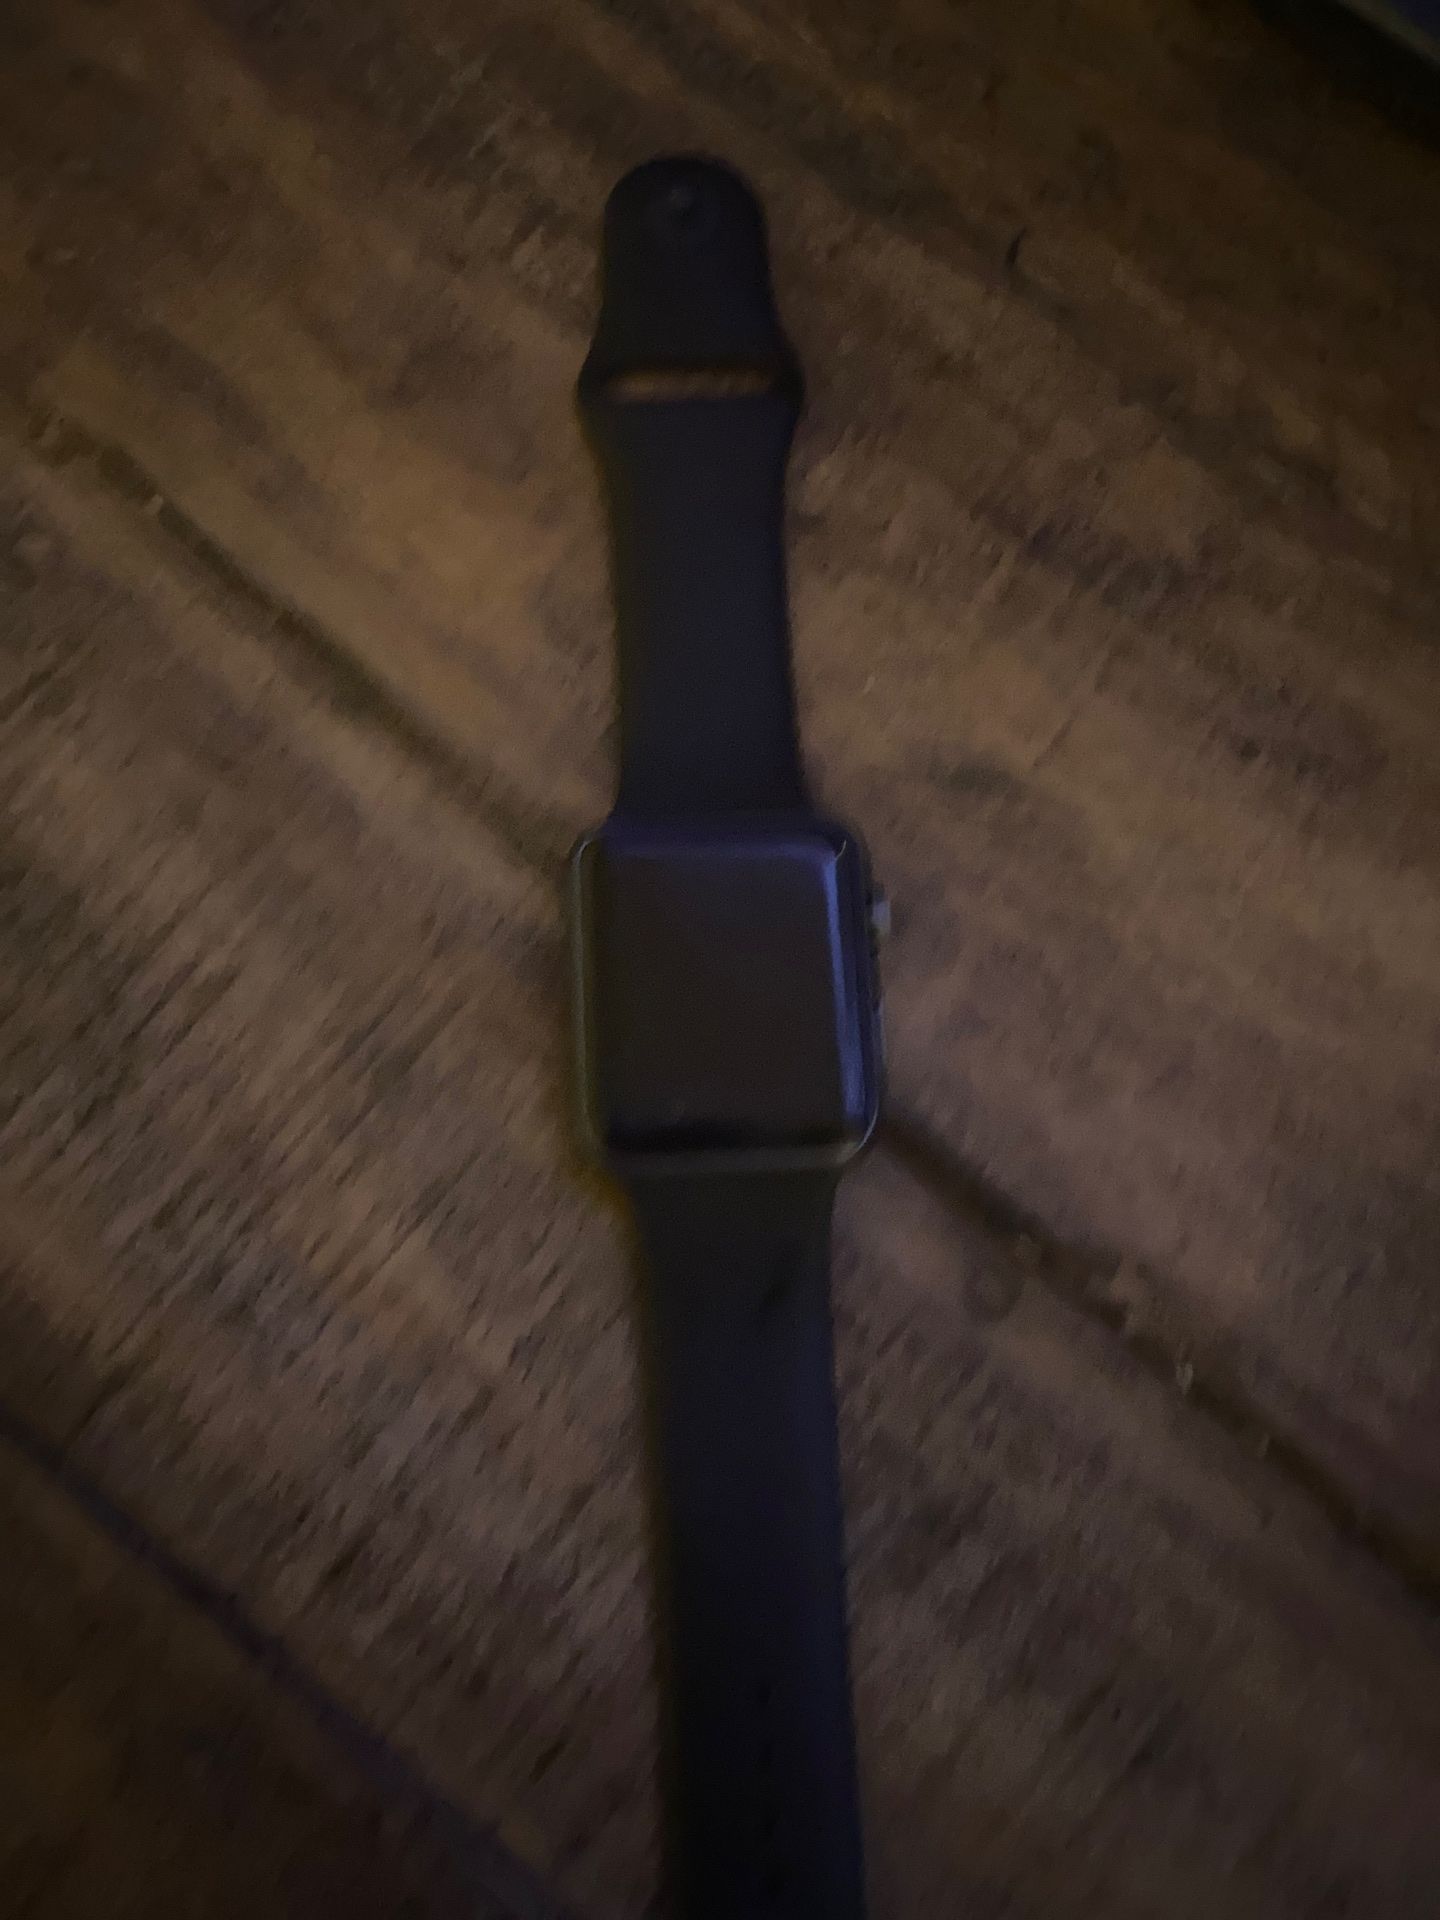 Apple Watch series 1